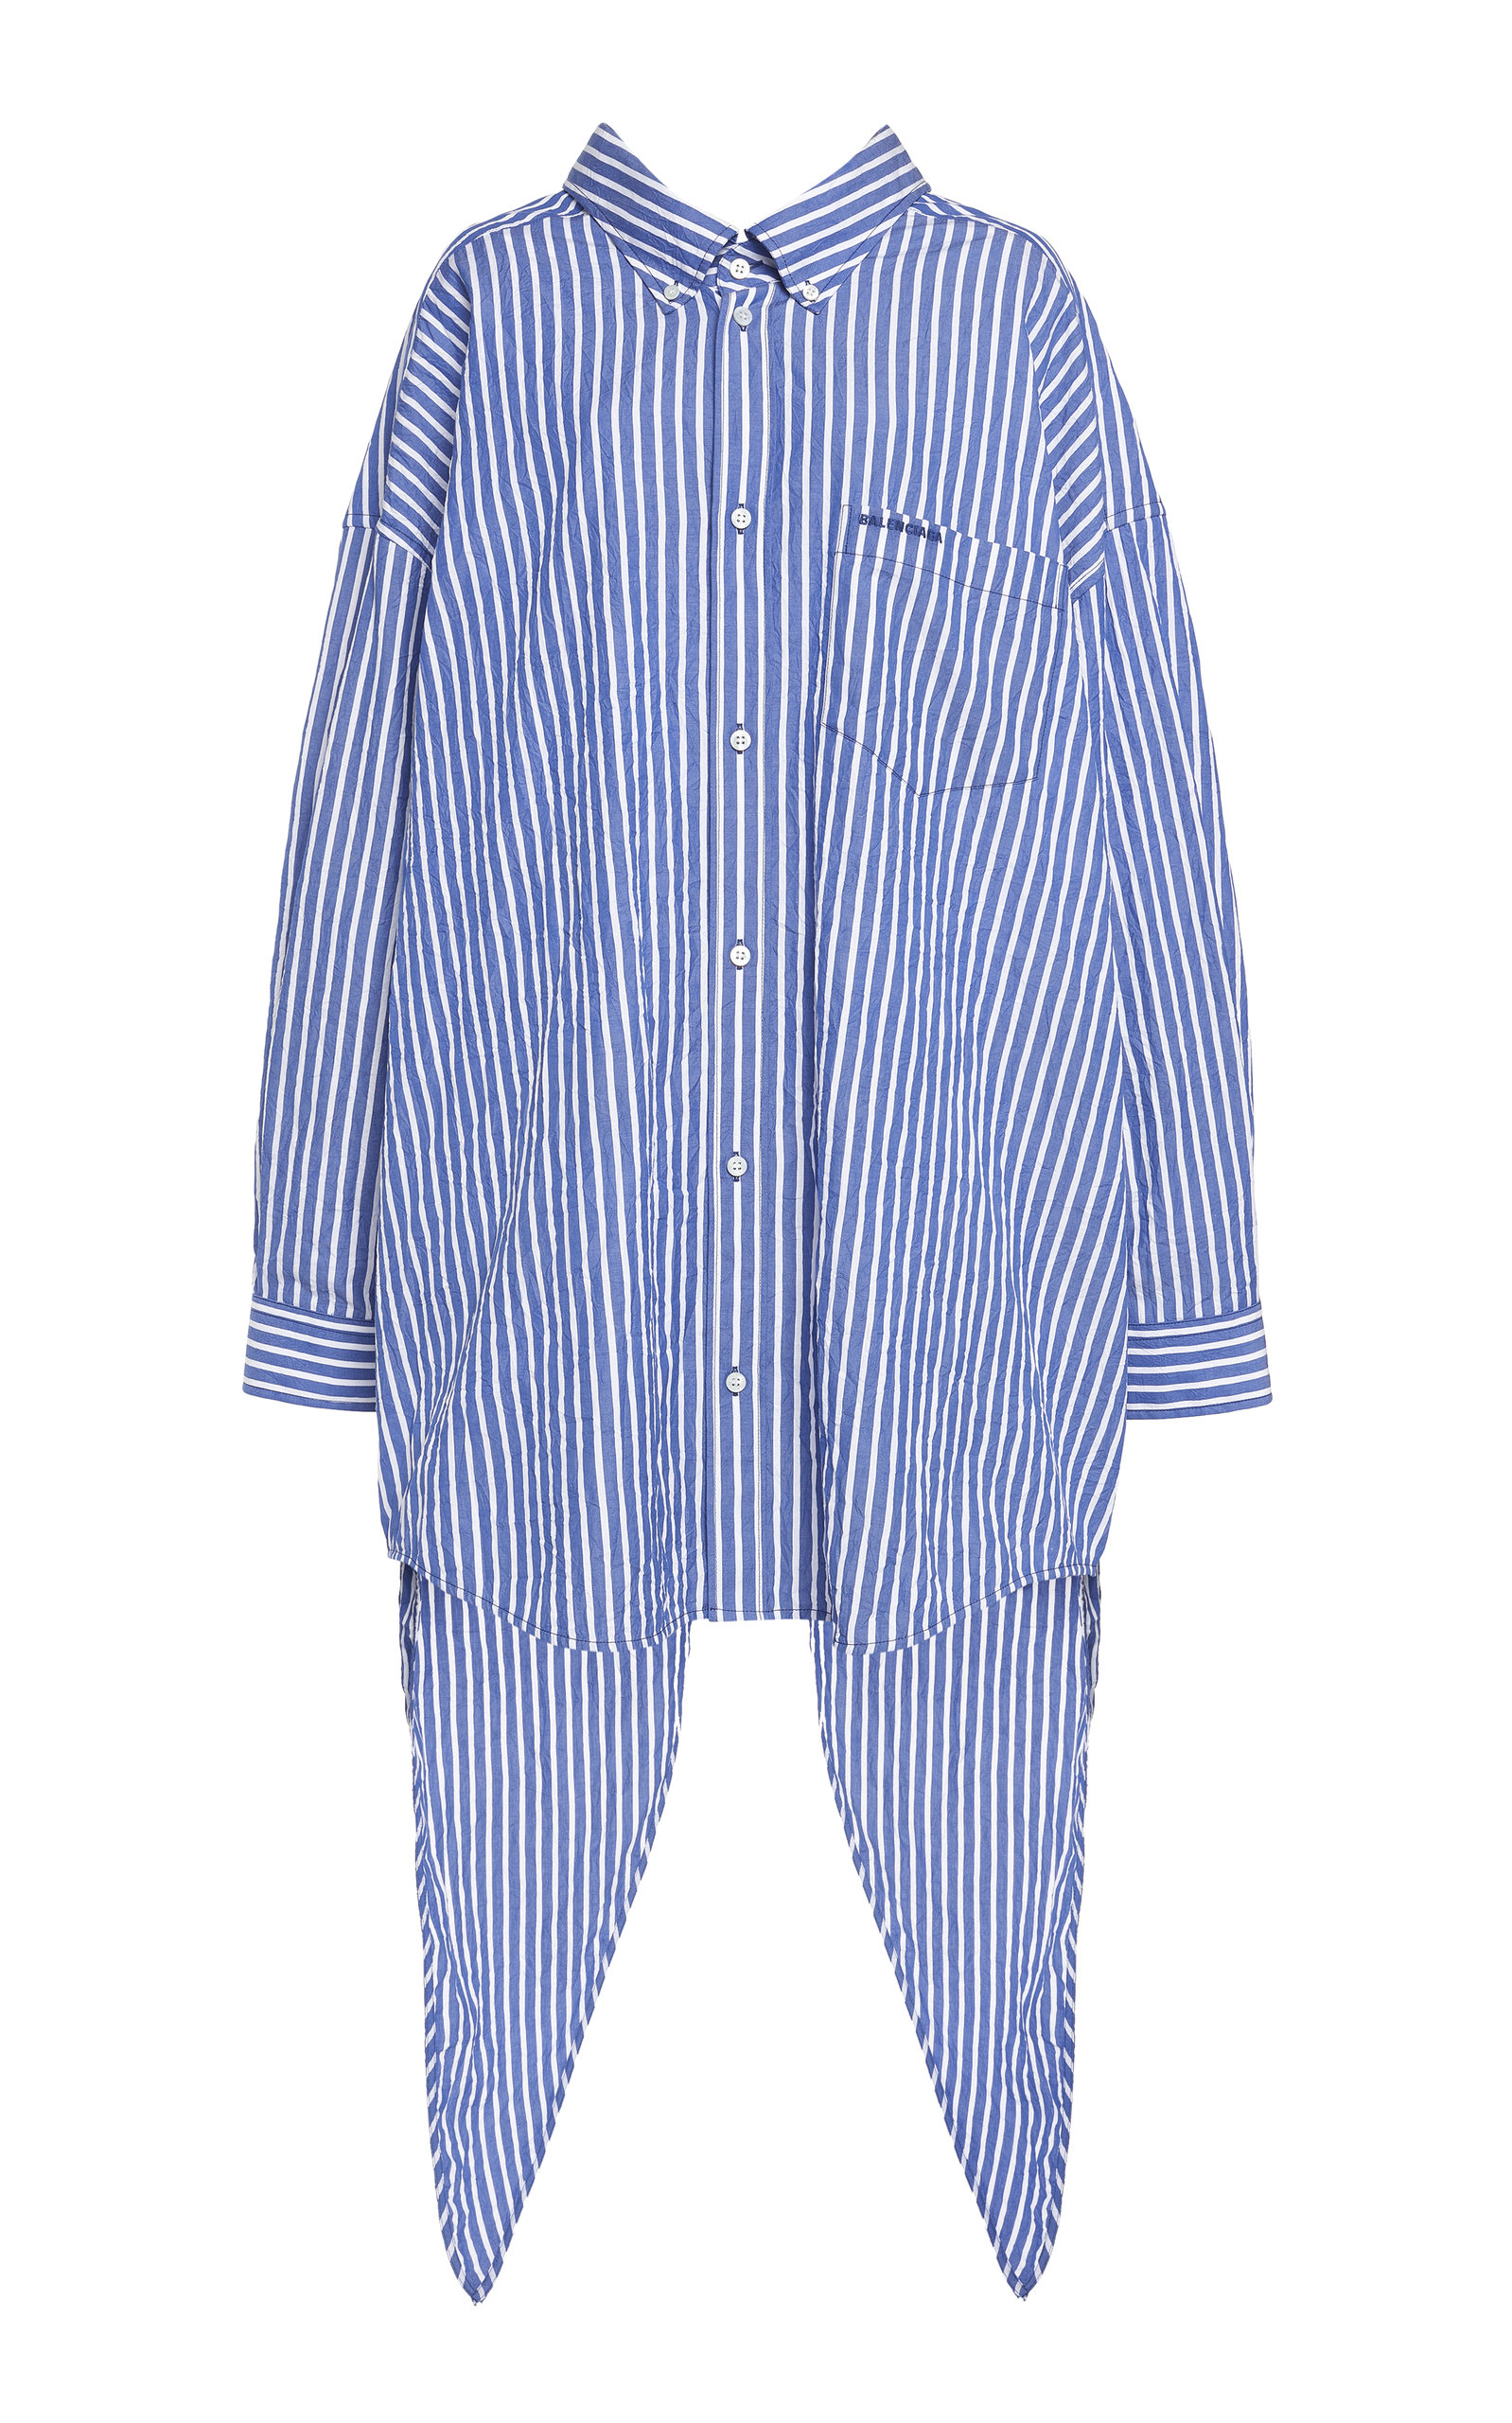 Balenciaga Women's Oversized Knotted Striped Cotton Shirt